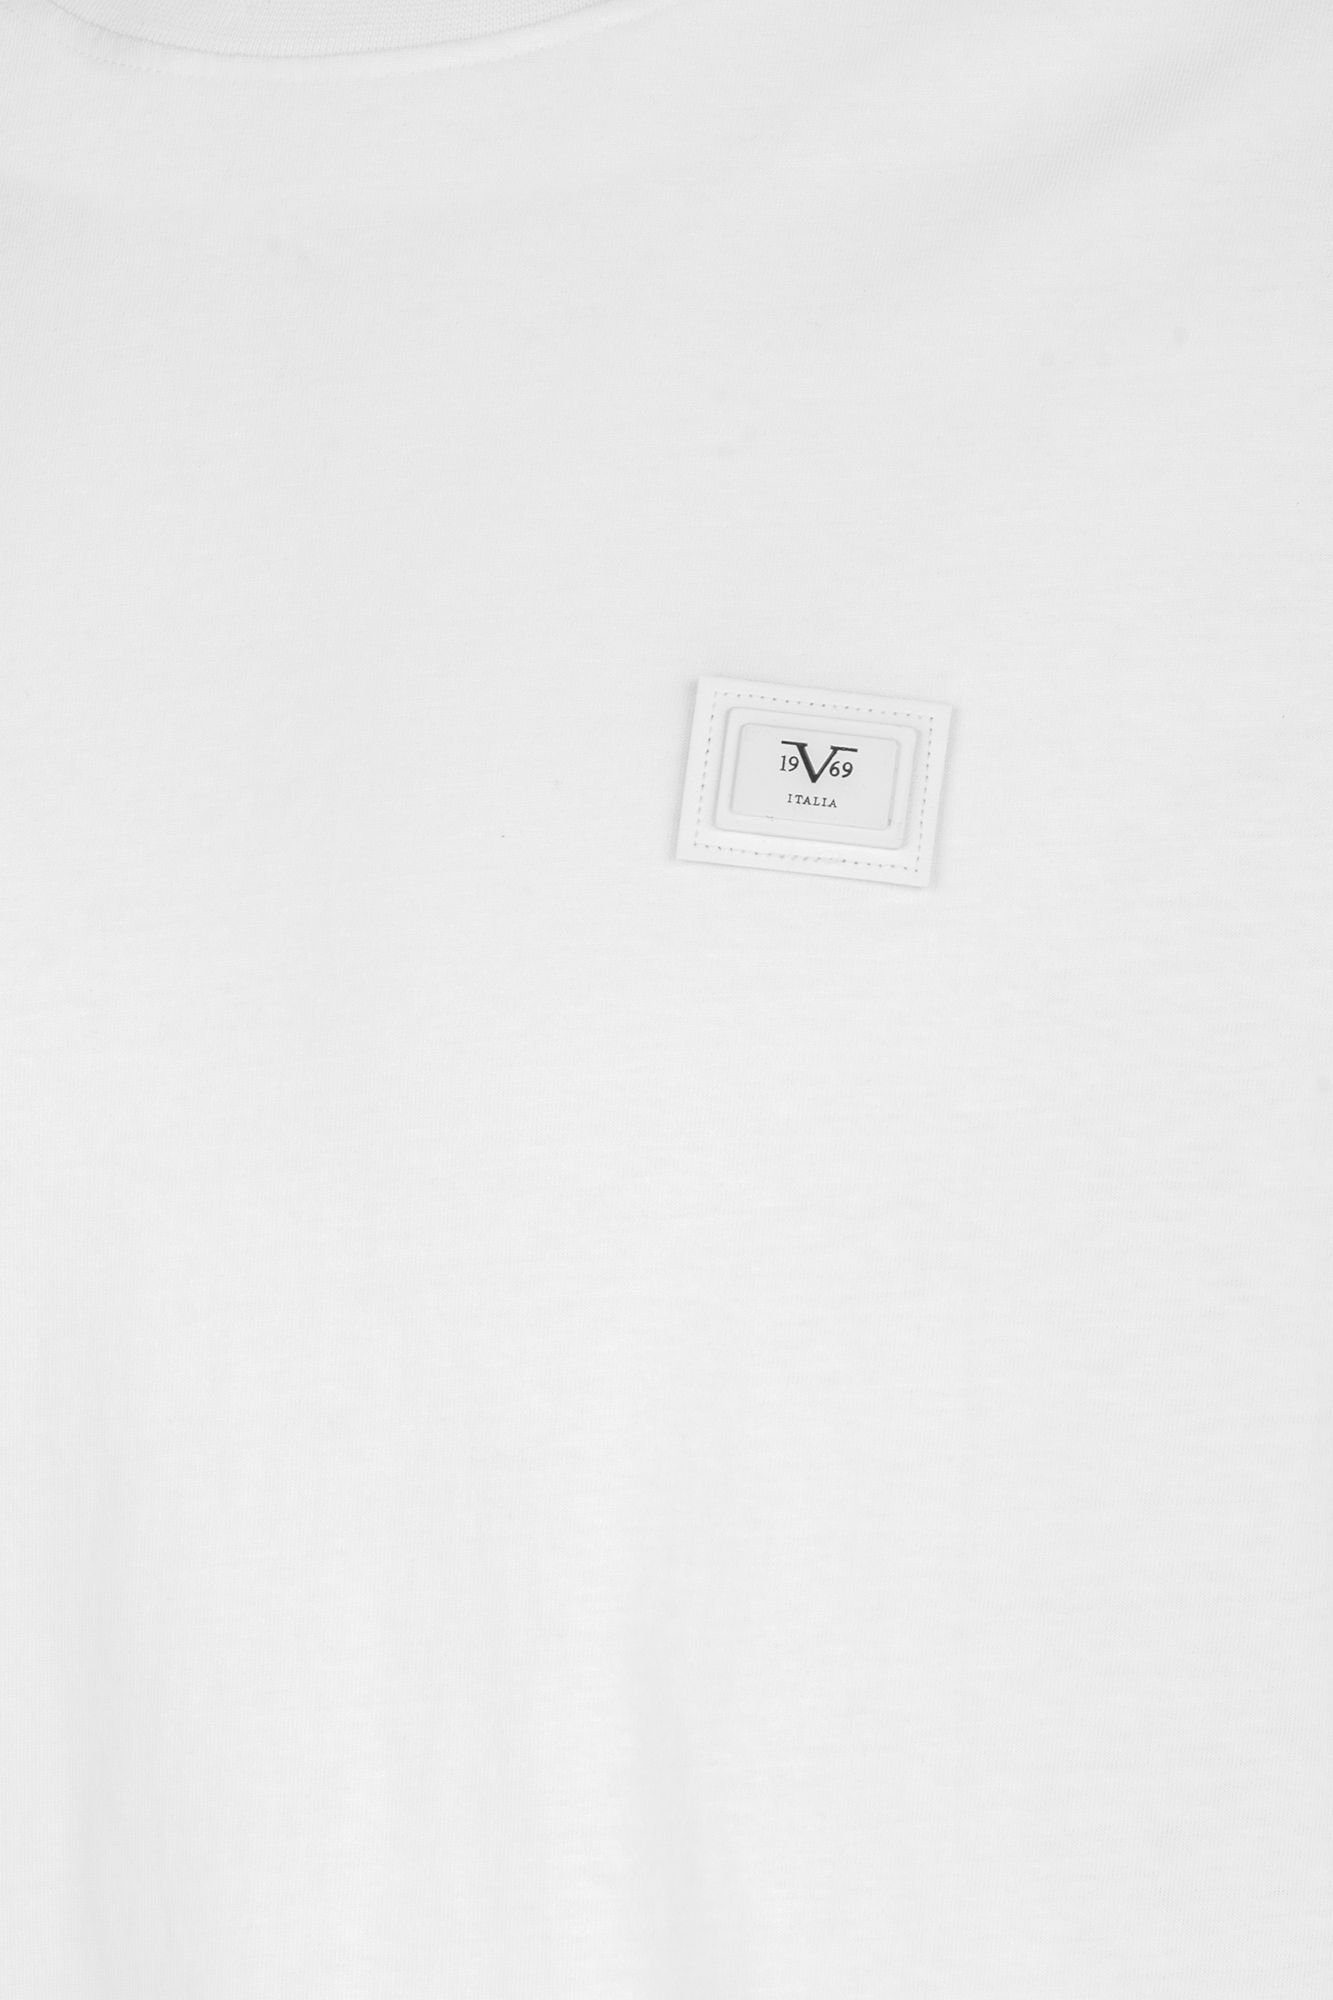 by 19V69 T-Shirt Italia Versace Luca